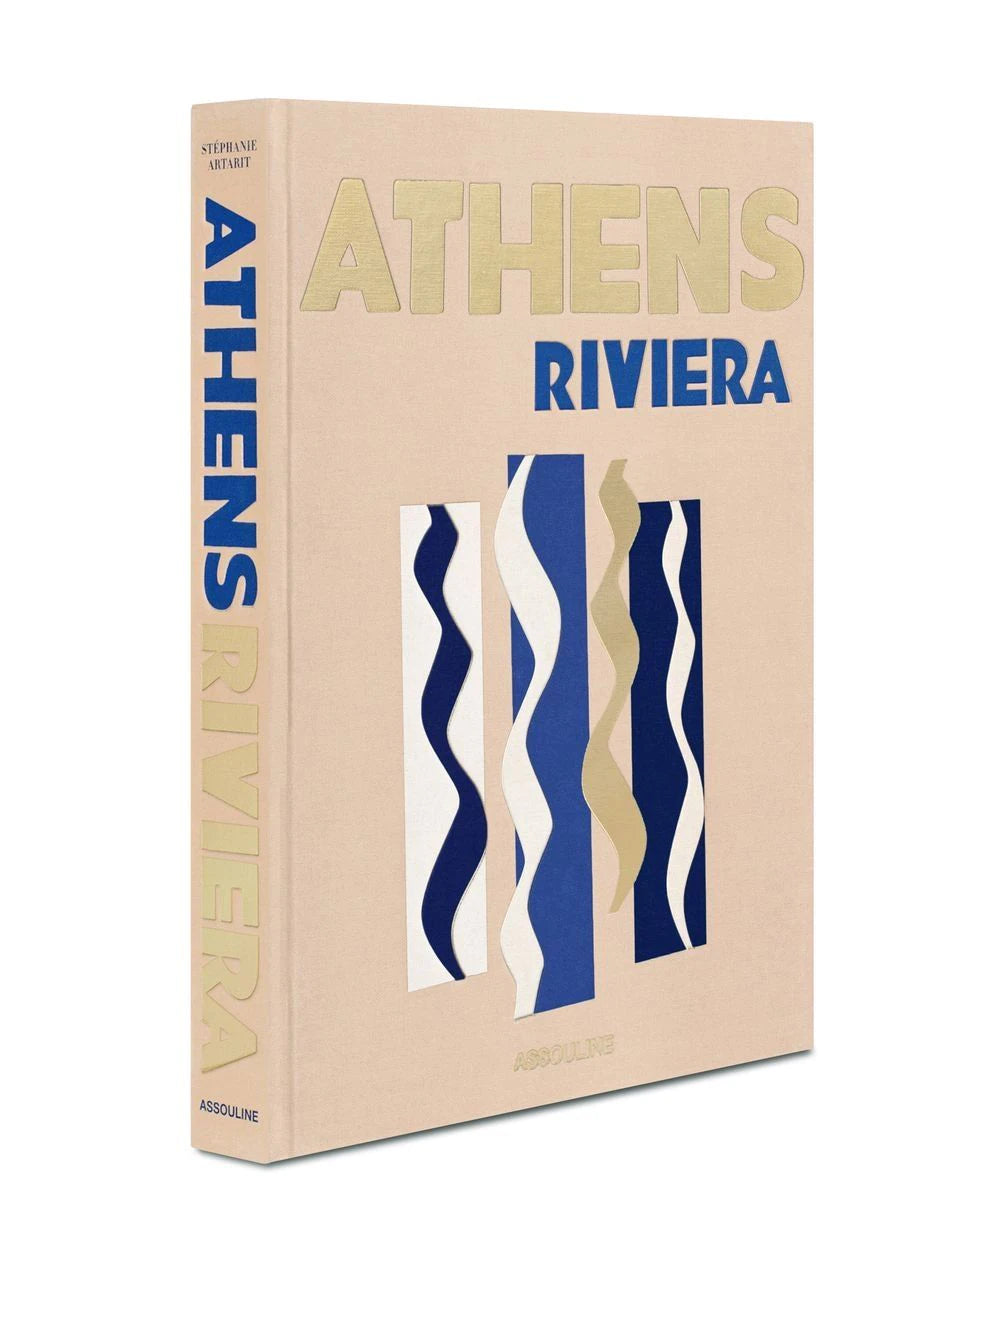 ATHENS RIVIERA BOOK - $105